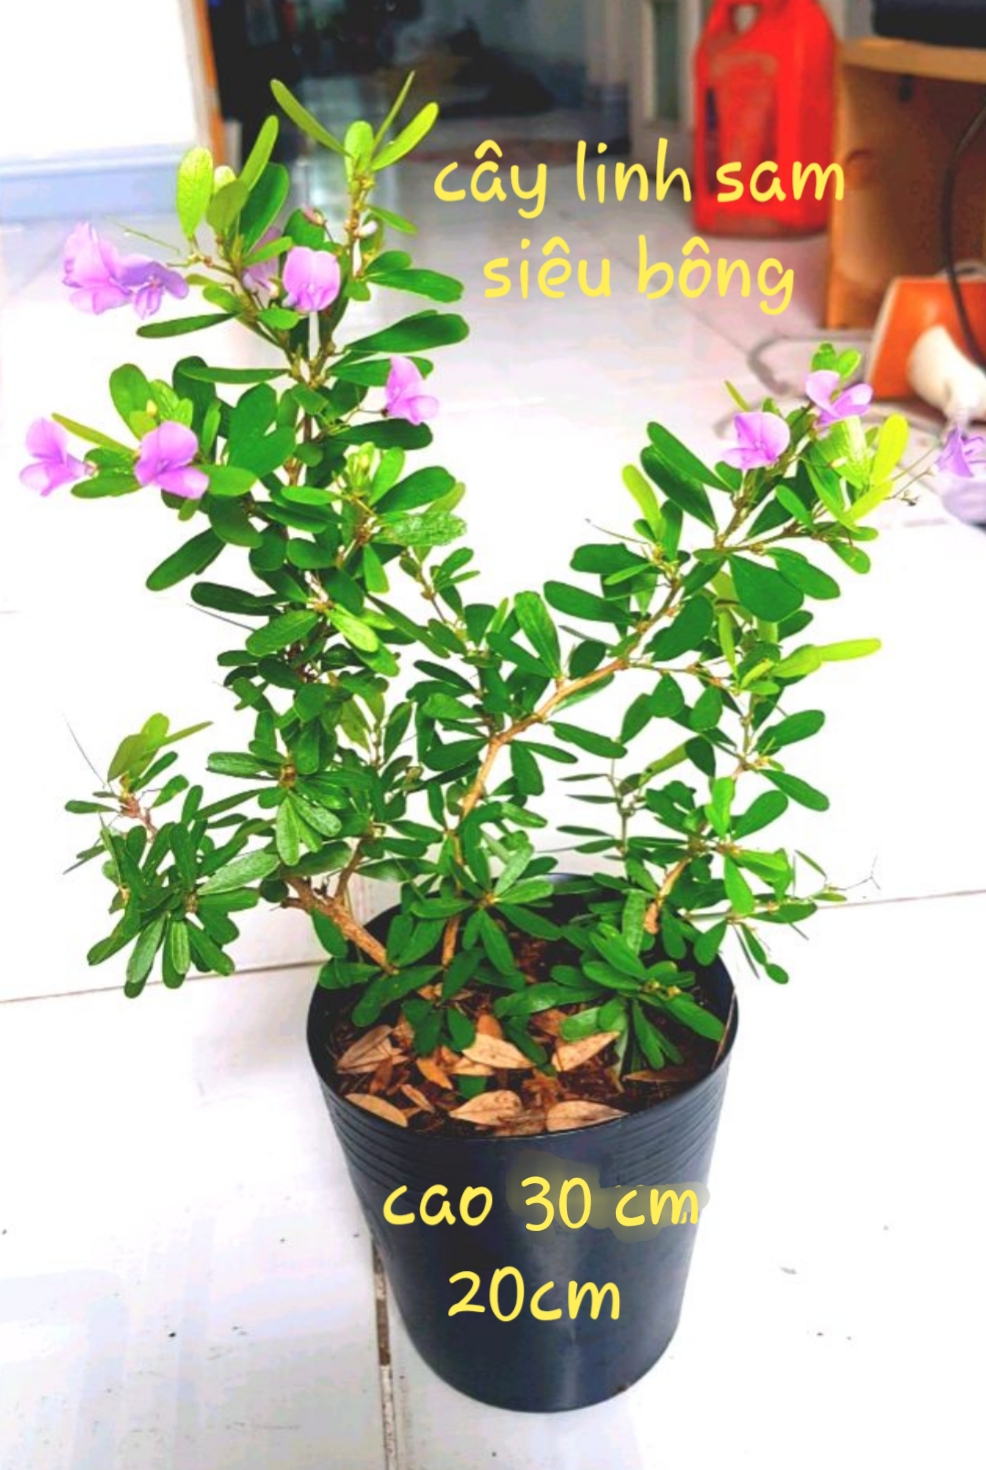 Cây linh sam hoa tím siêu bông, siêu dễ trồng, hoa quanh năm, cao tầm 70cm